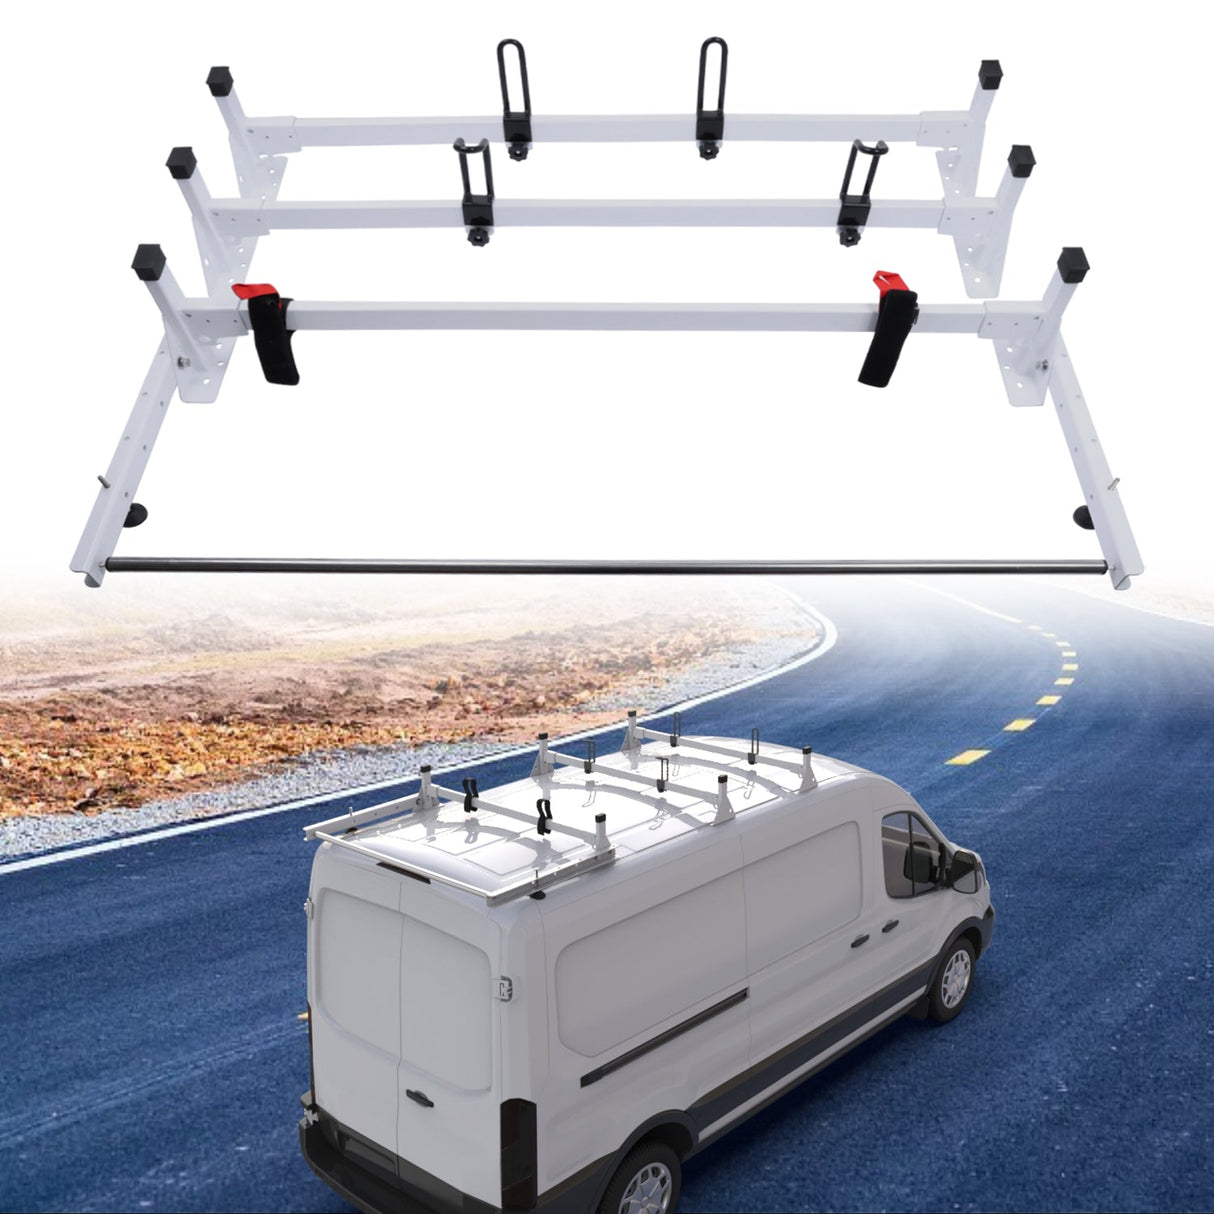 Melipron ladder rack for van with rear cargo roller-11